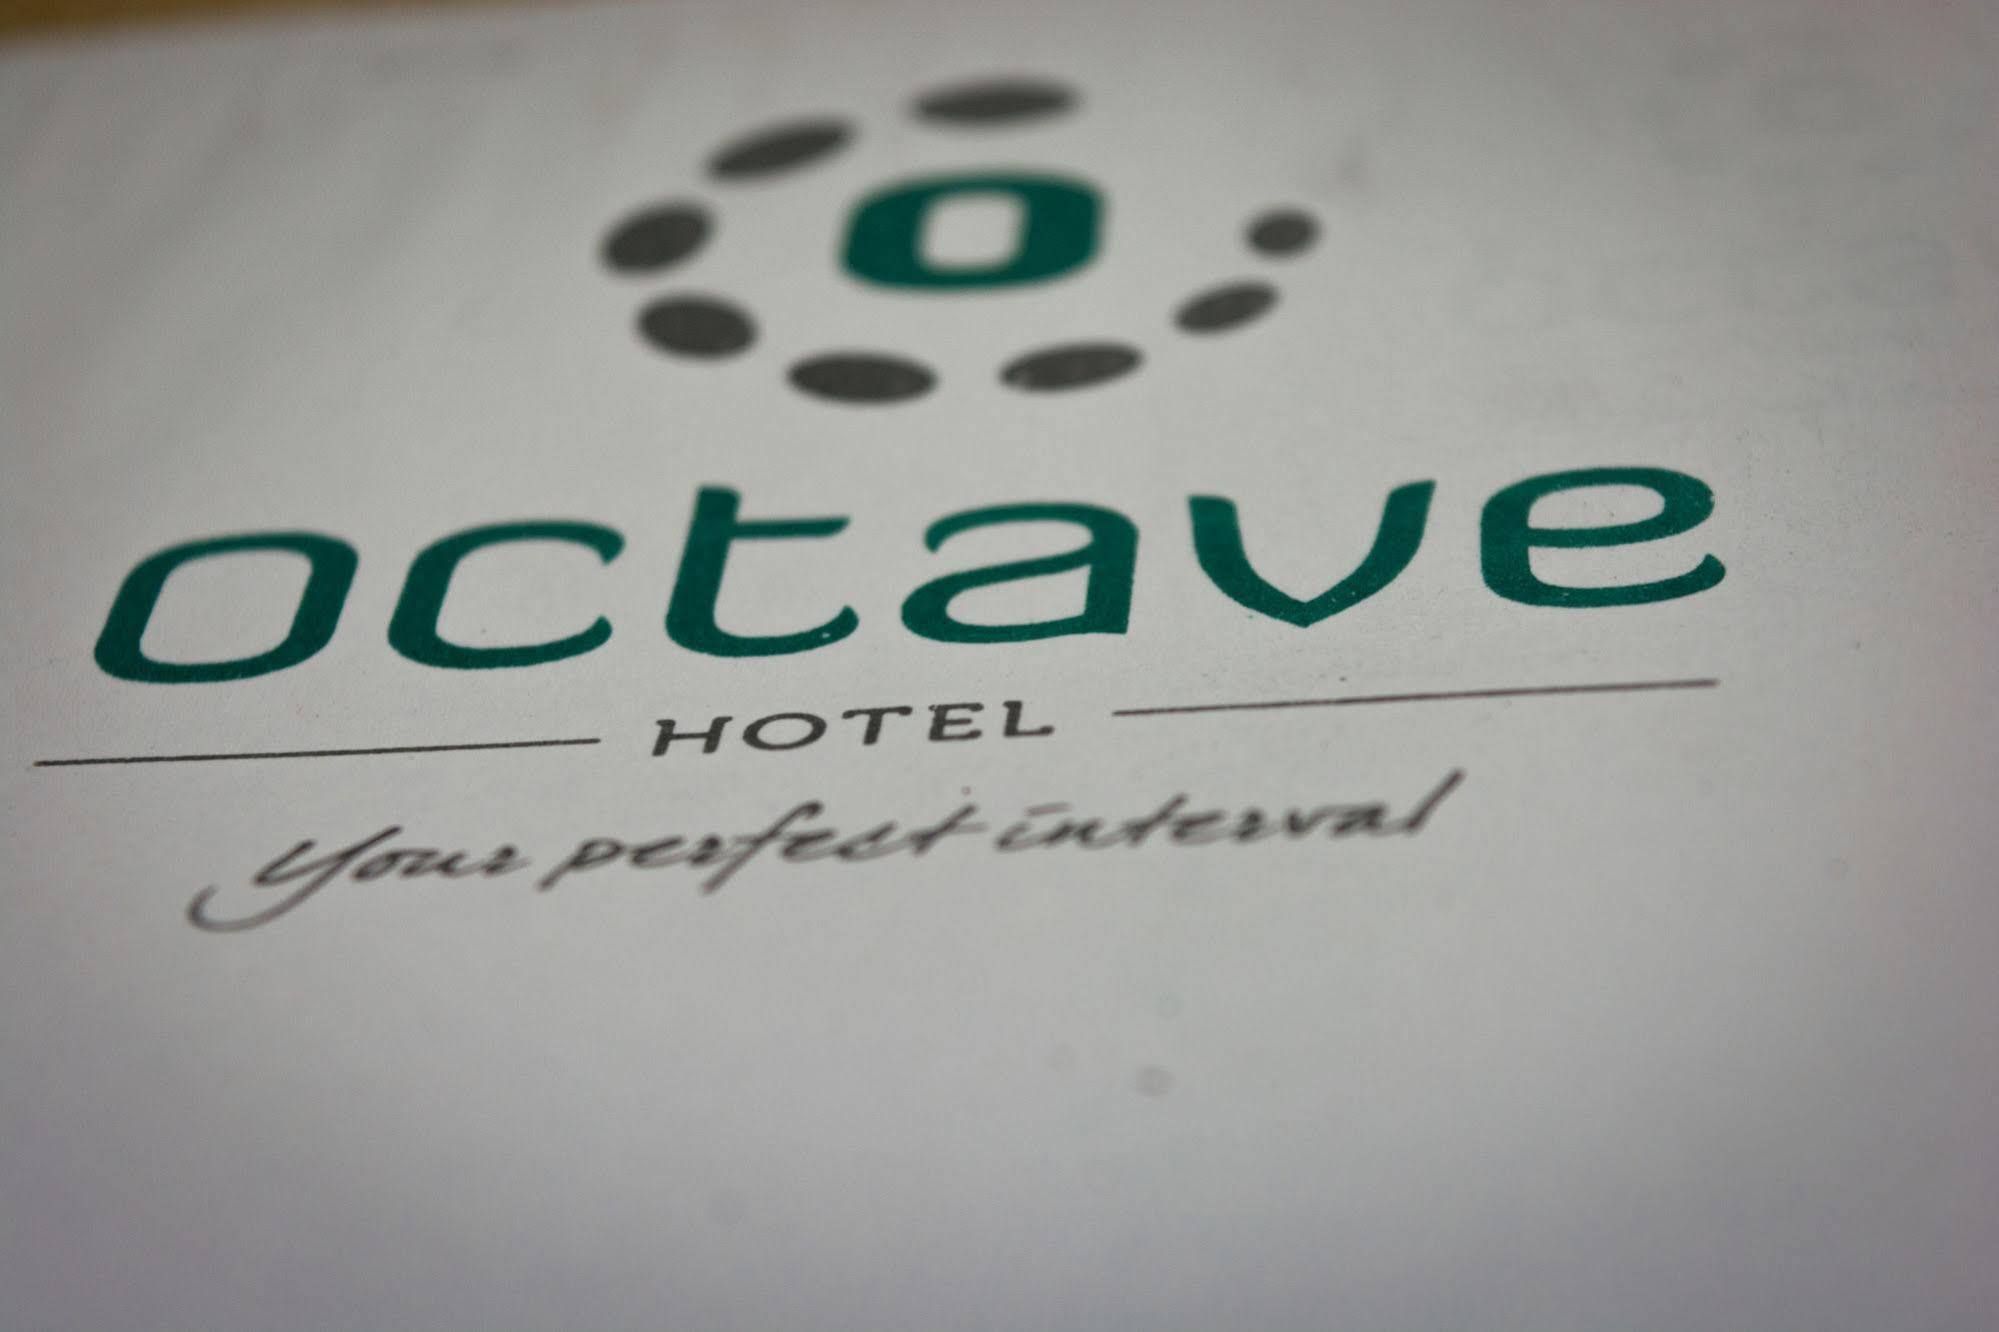 Octave Hotel & Spa - Marathahalli Bangalore Exterior photo